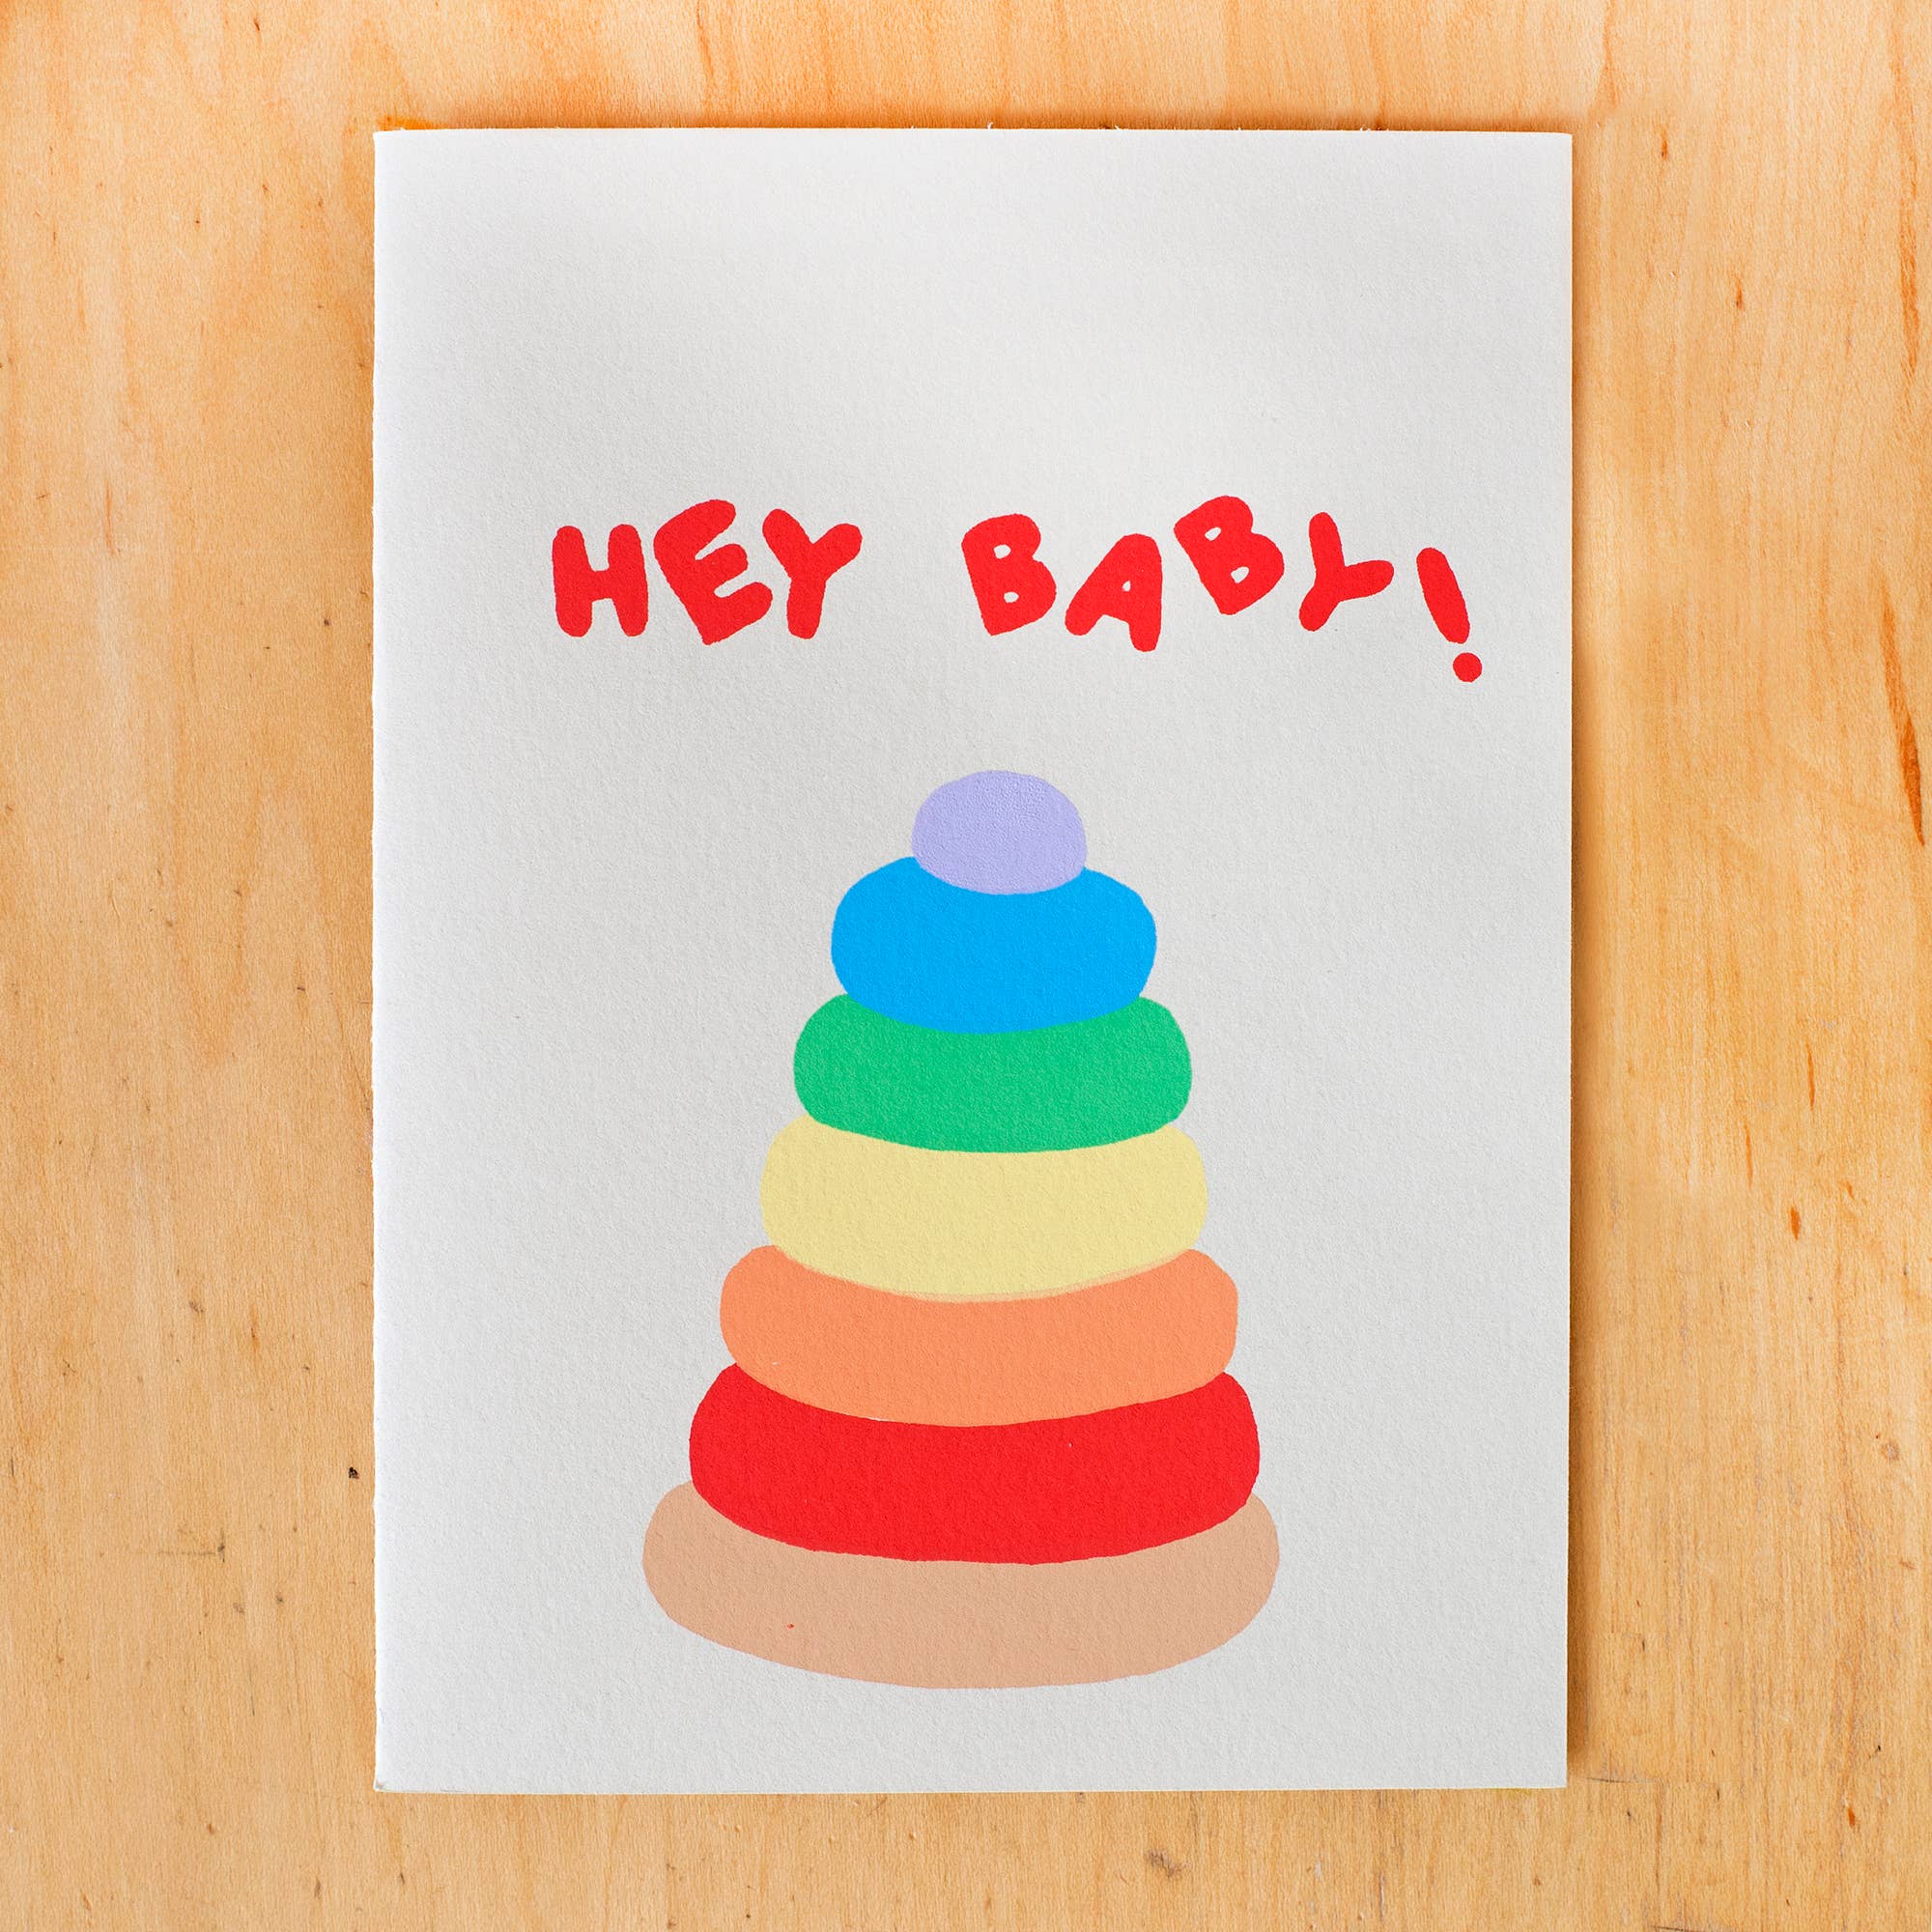 Hey Baby Greeting Card